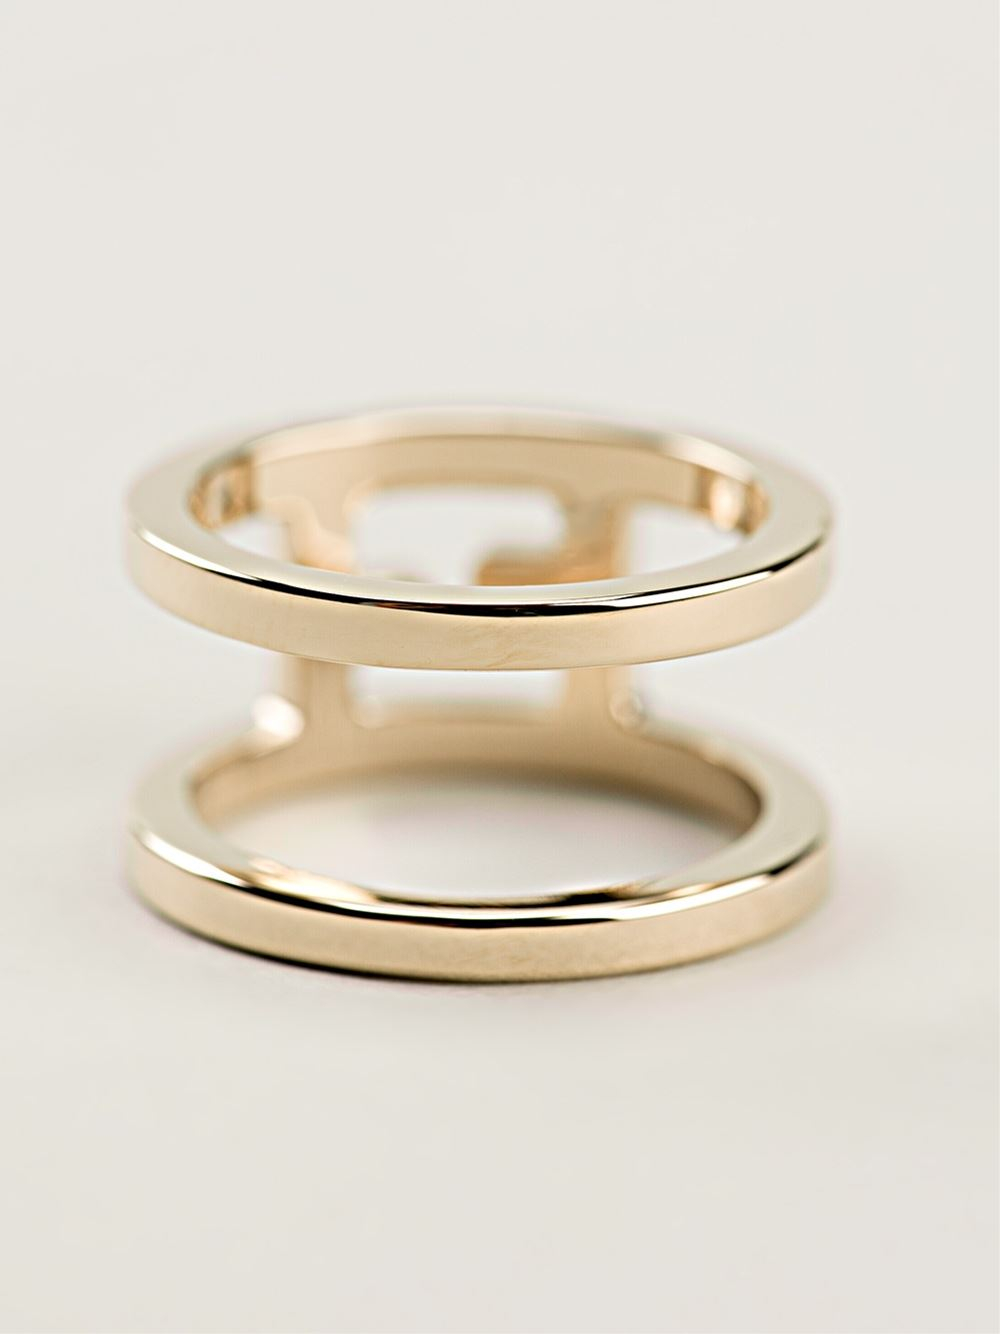 Lyst - Fendi Double Band Ring in Metallic